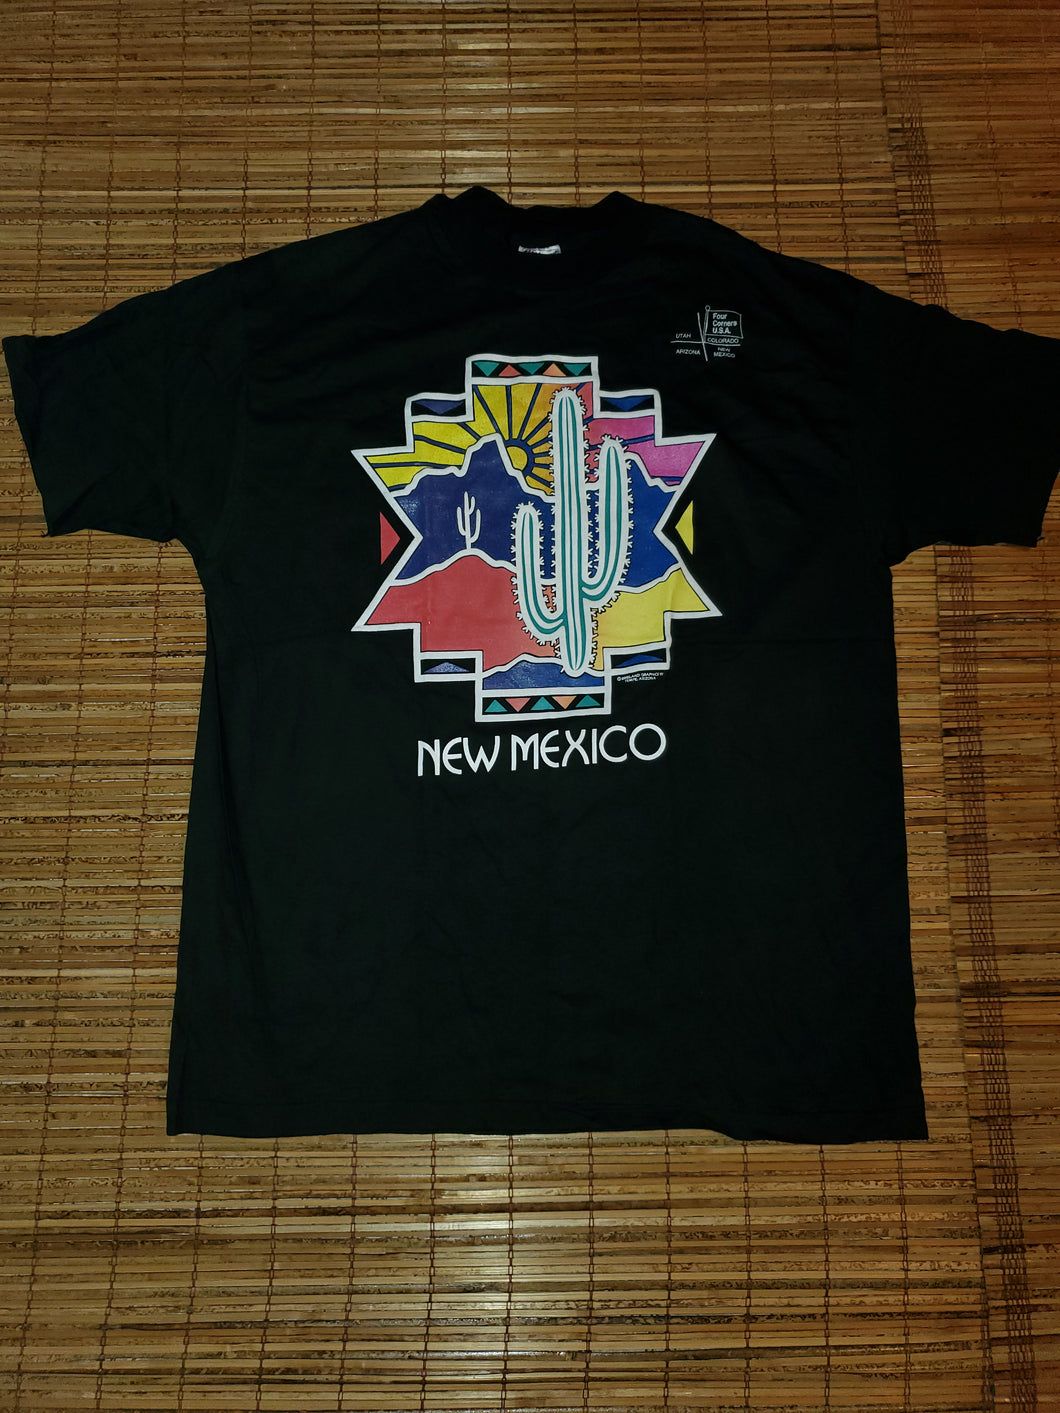 XL - Vintage 1997 New Mexico Shirt